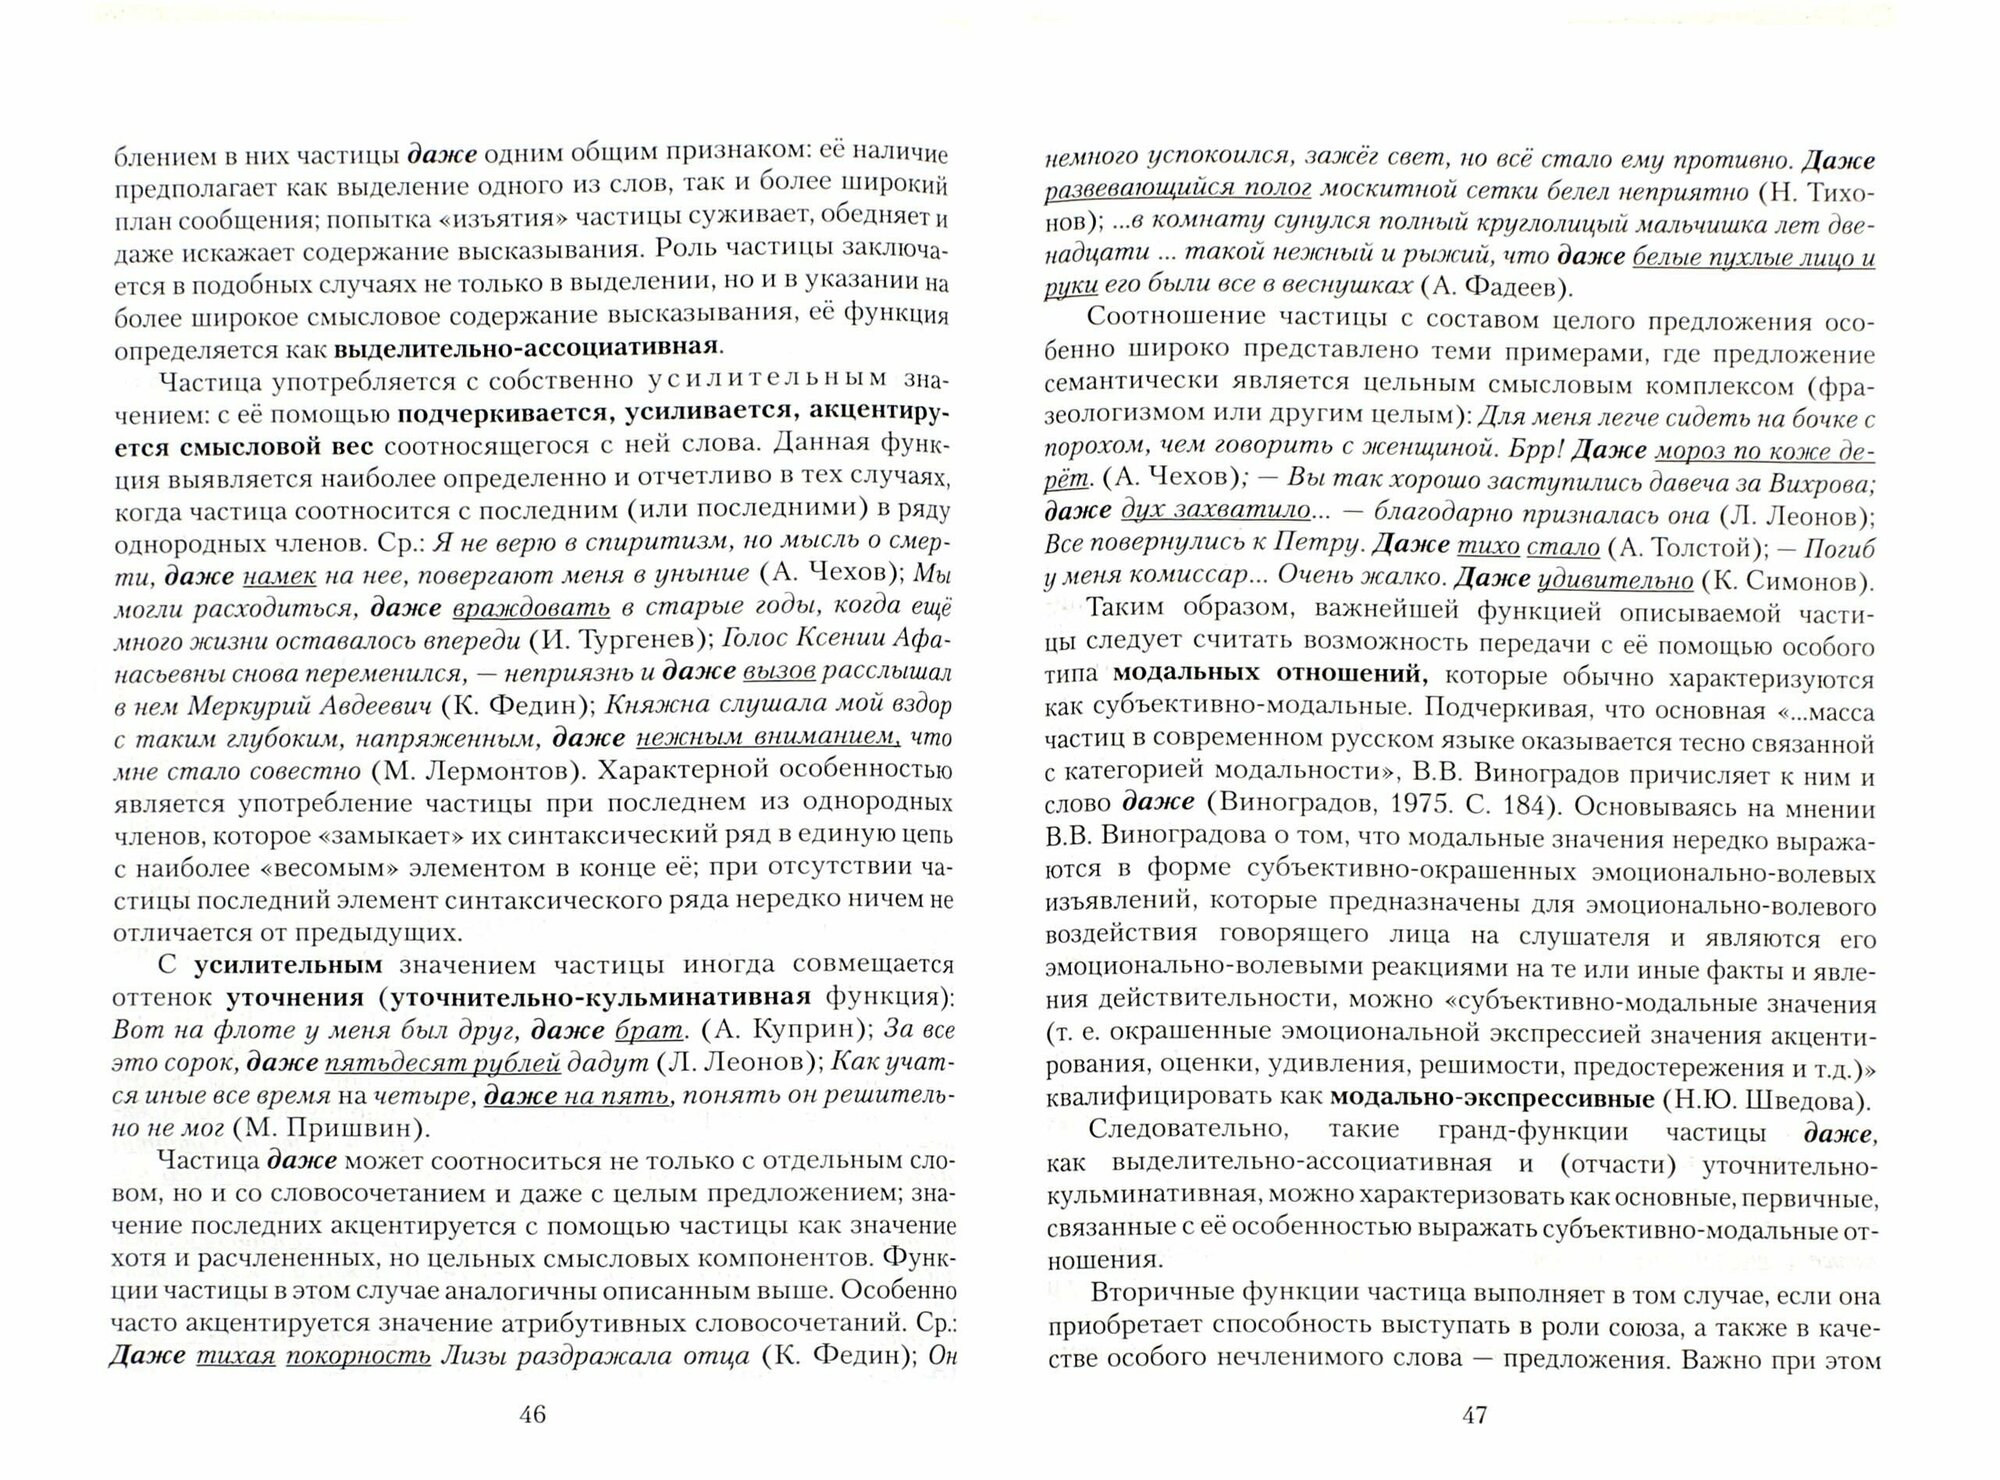 Русские частицы: семантика, грамматика, функции. Монография - фото №2